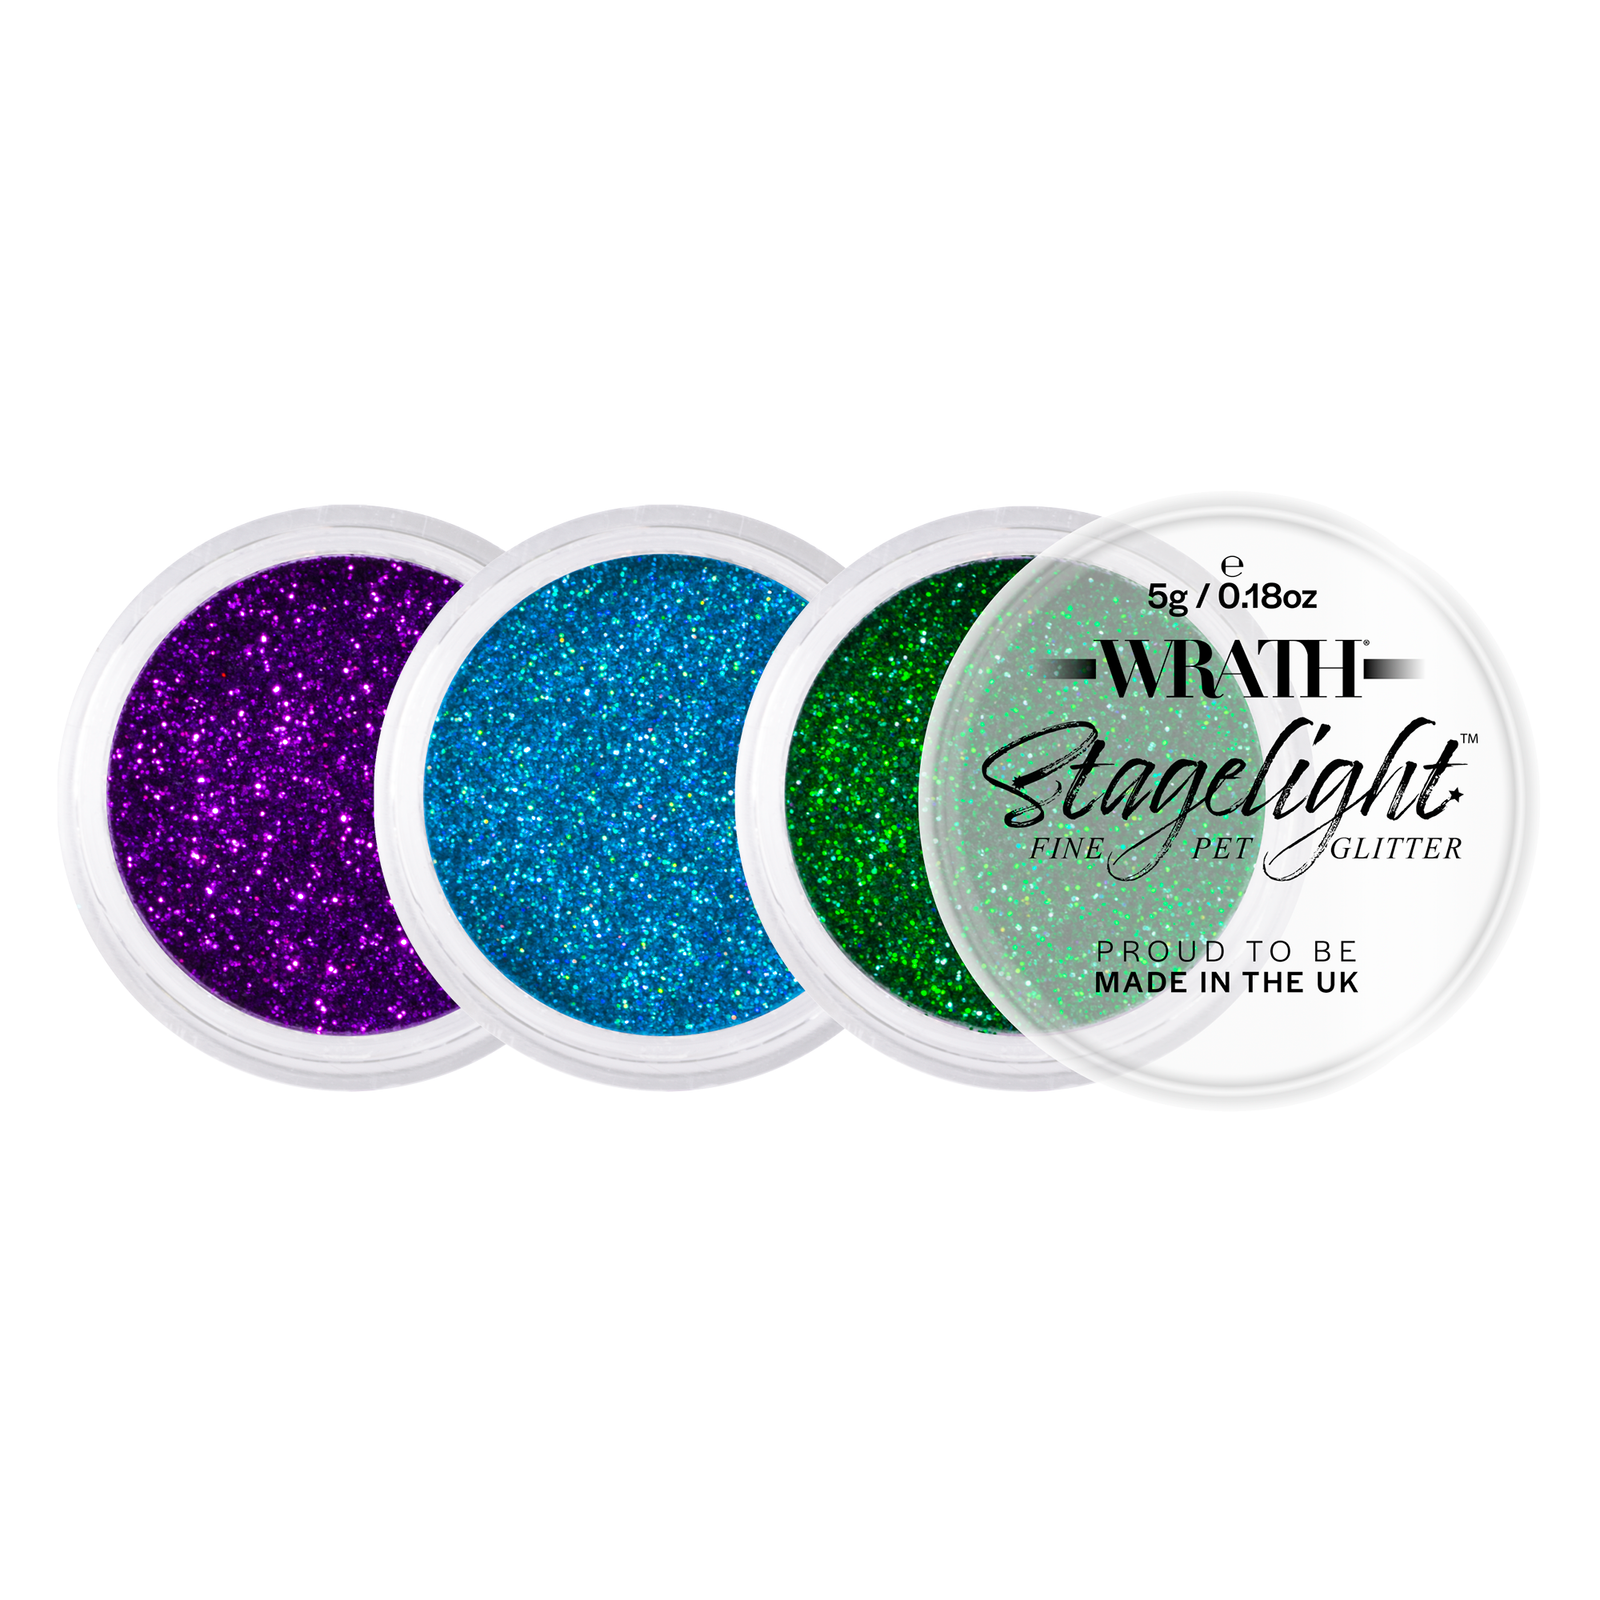 Stagelight Loose Glitter - WRATH Cosmetics